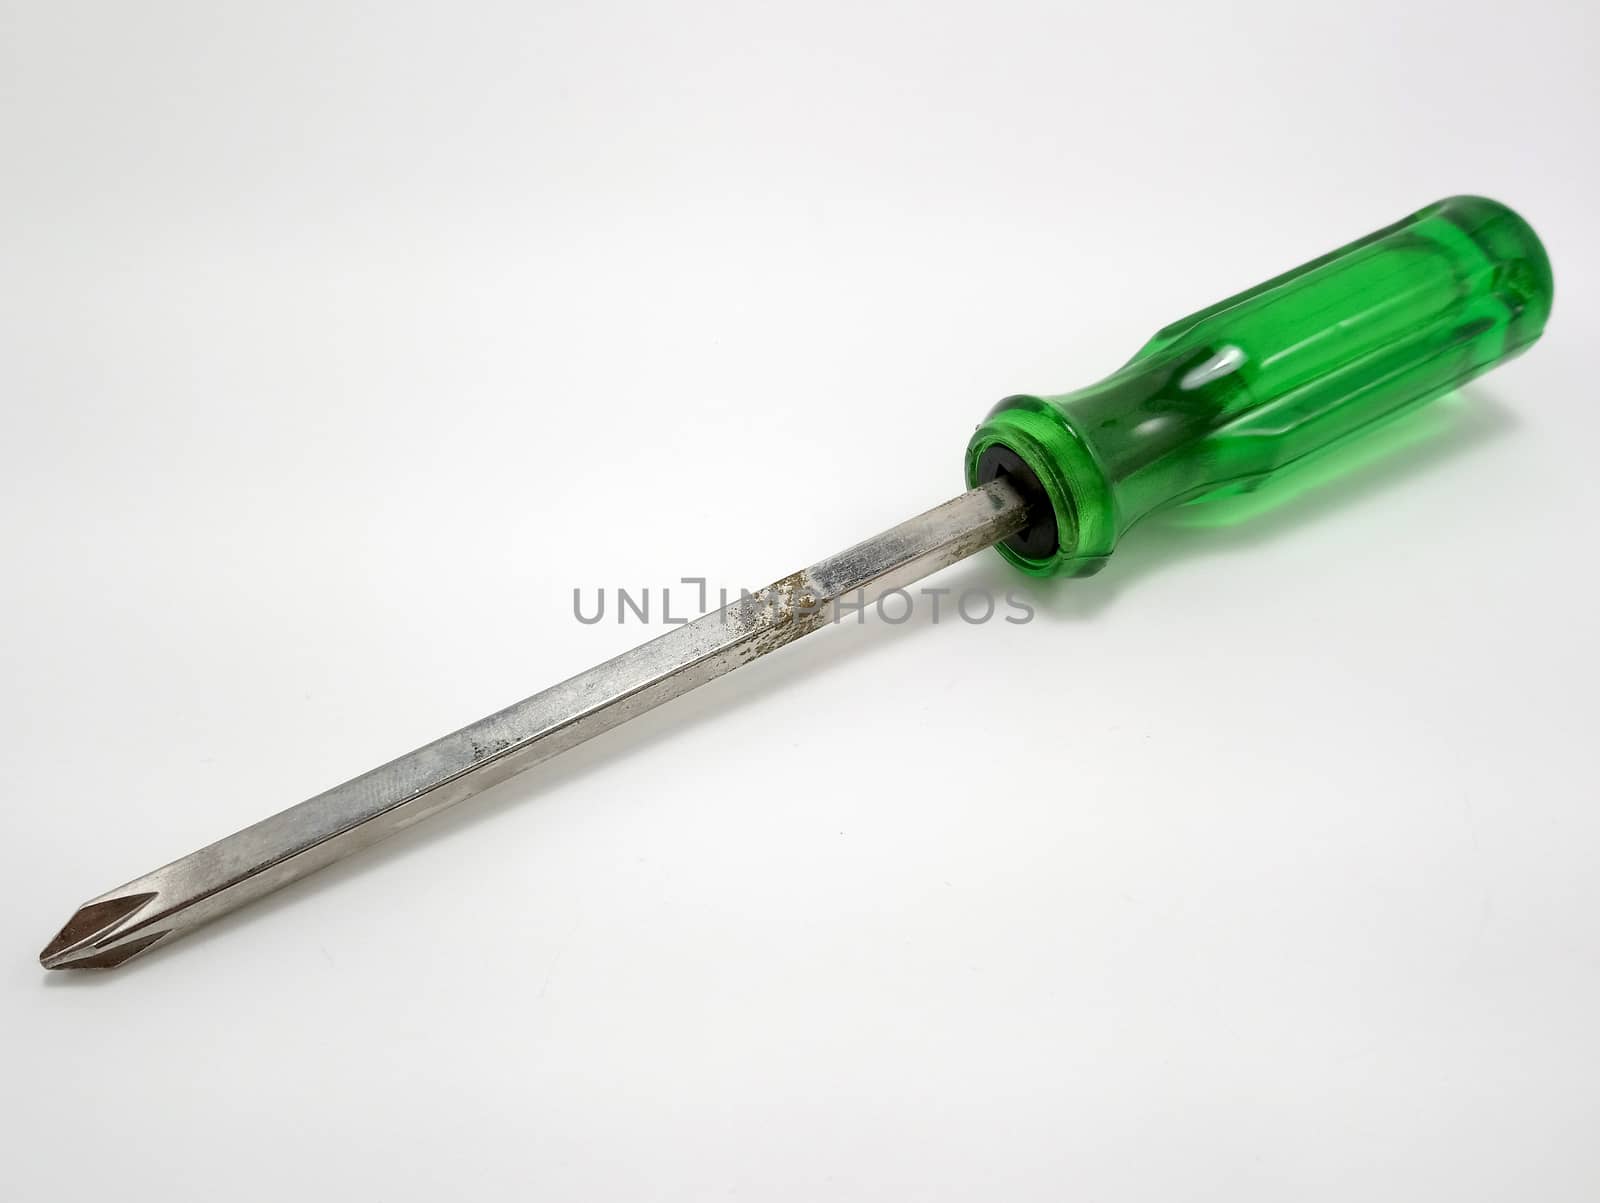 Green handle cross head screwdriver by imwaltersy